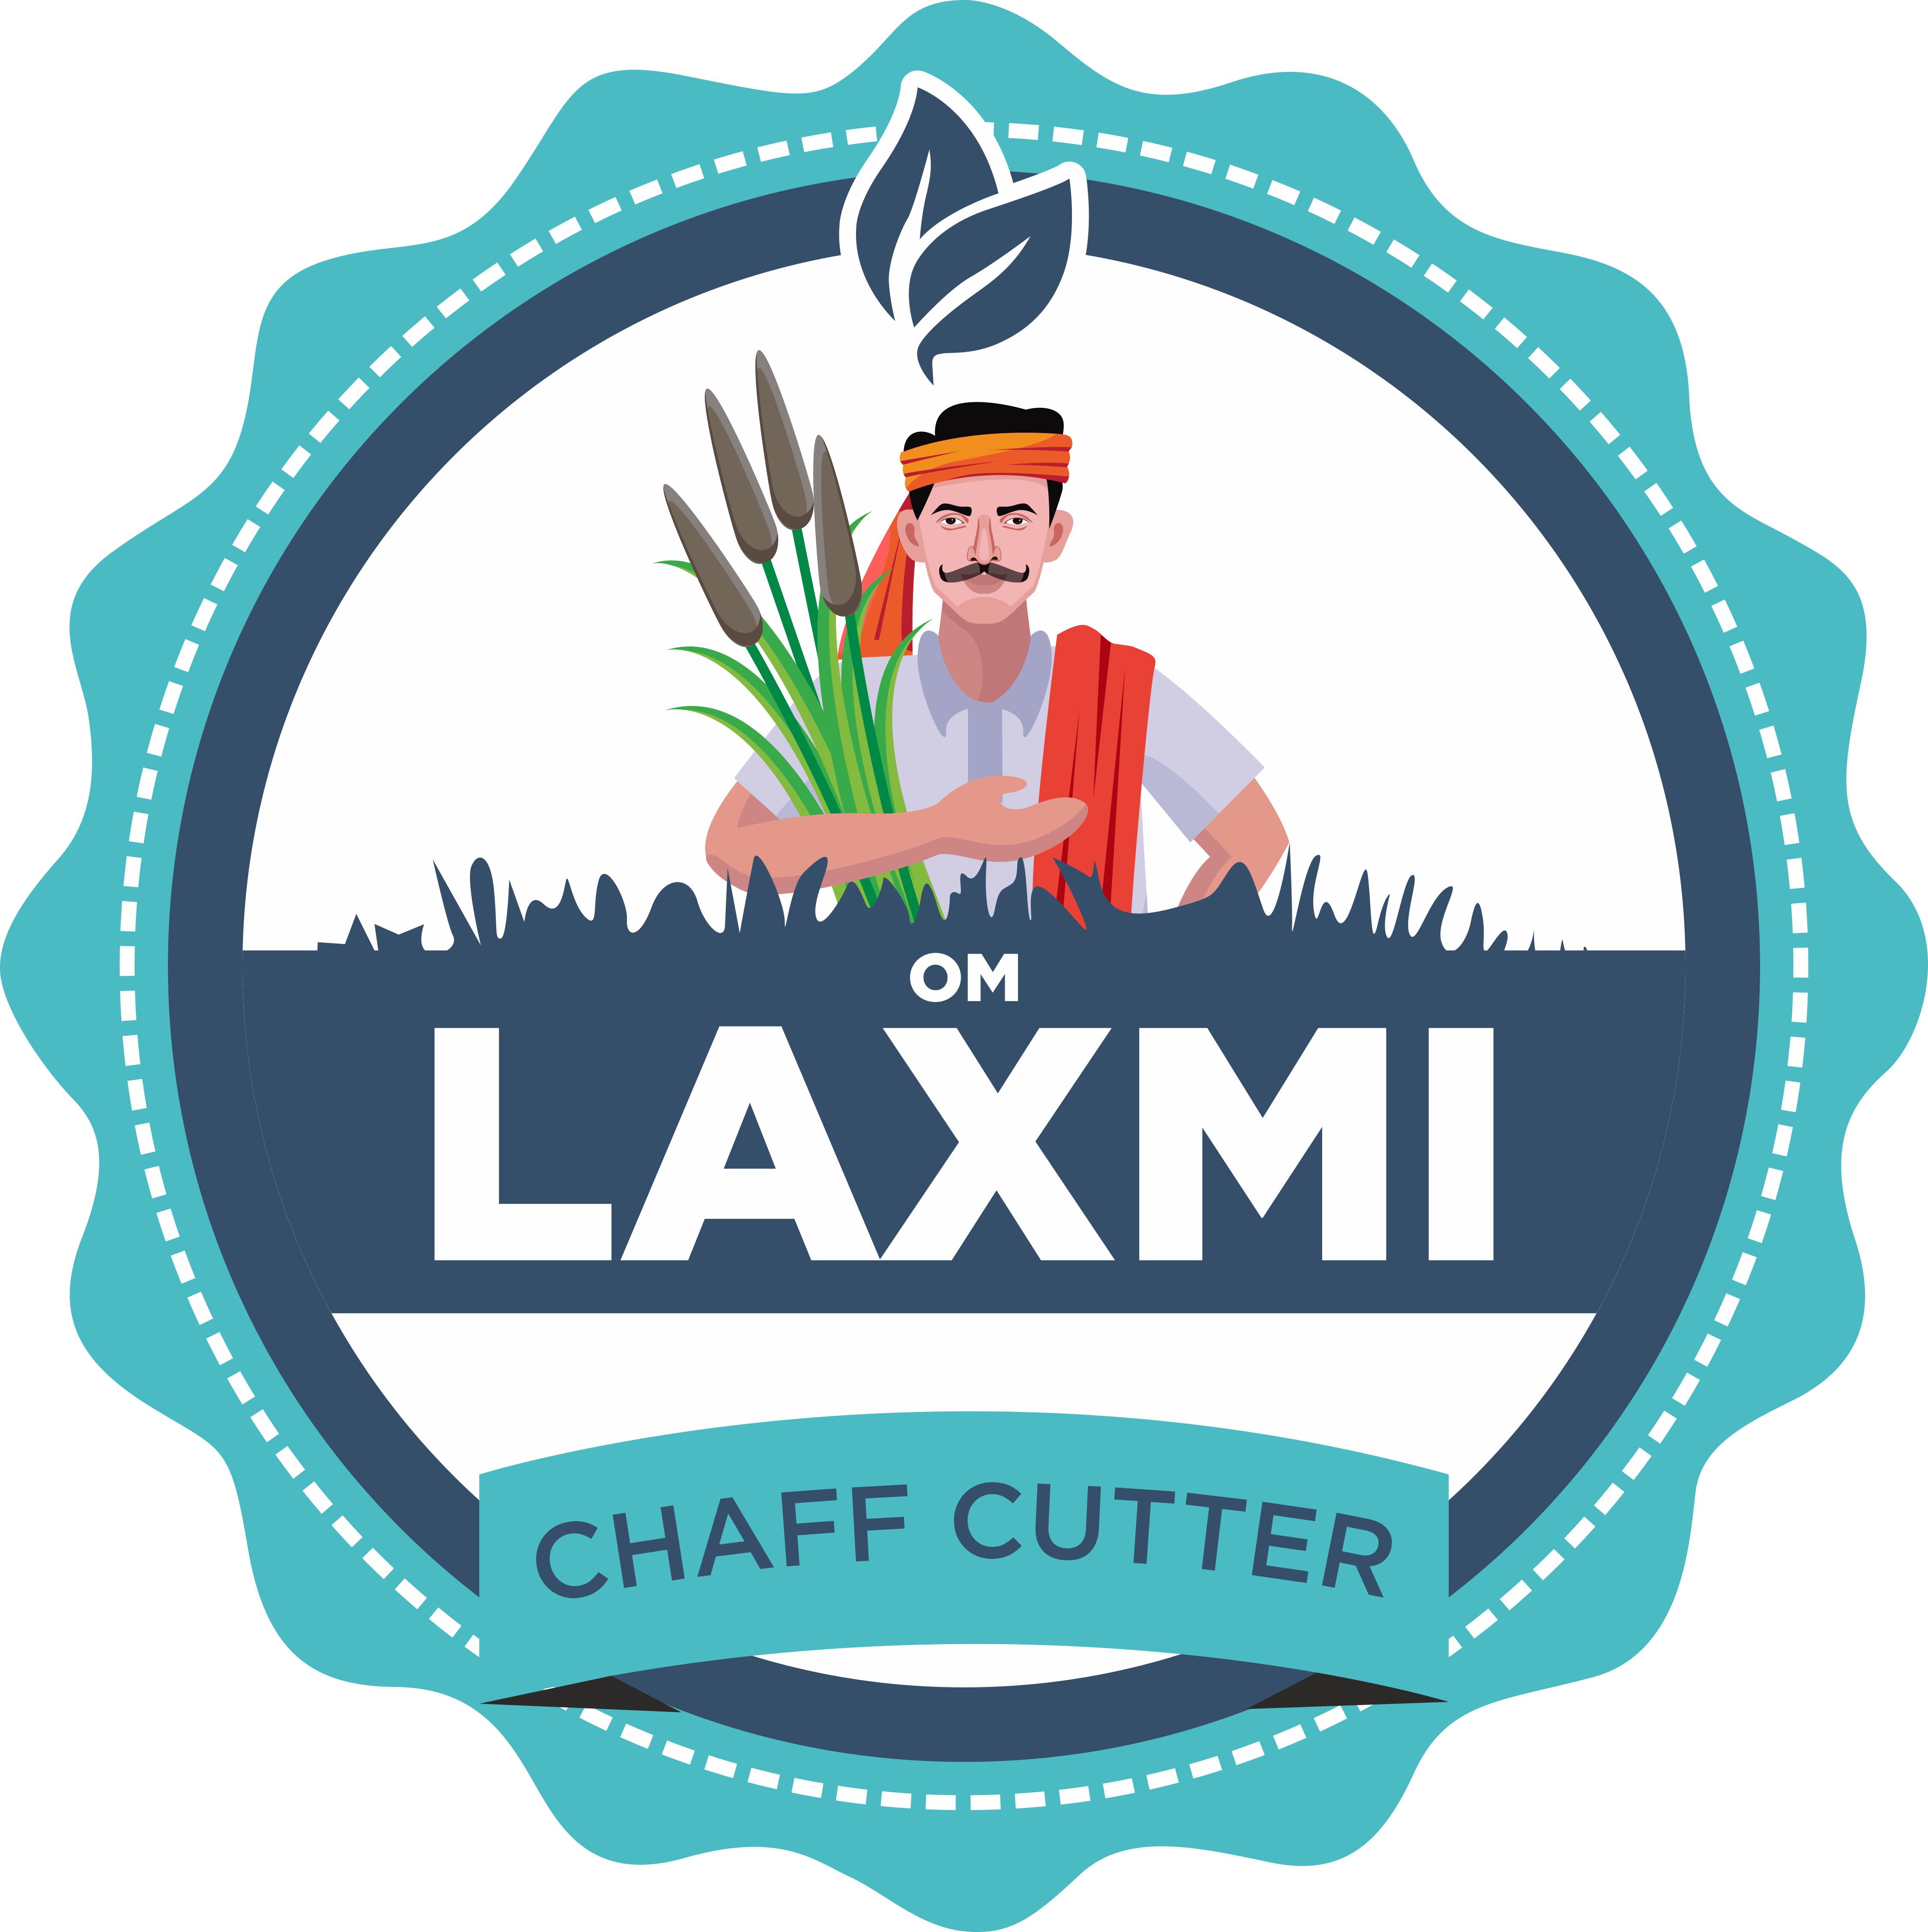 Om Laxmi Chaff Cutter business details